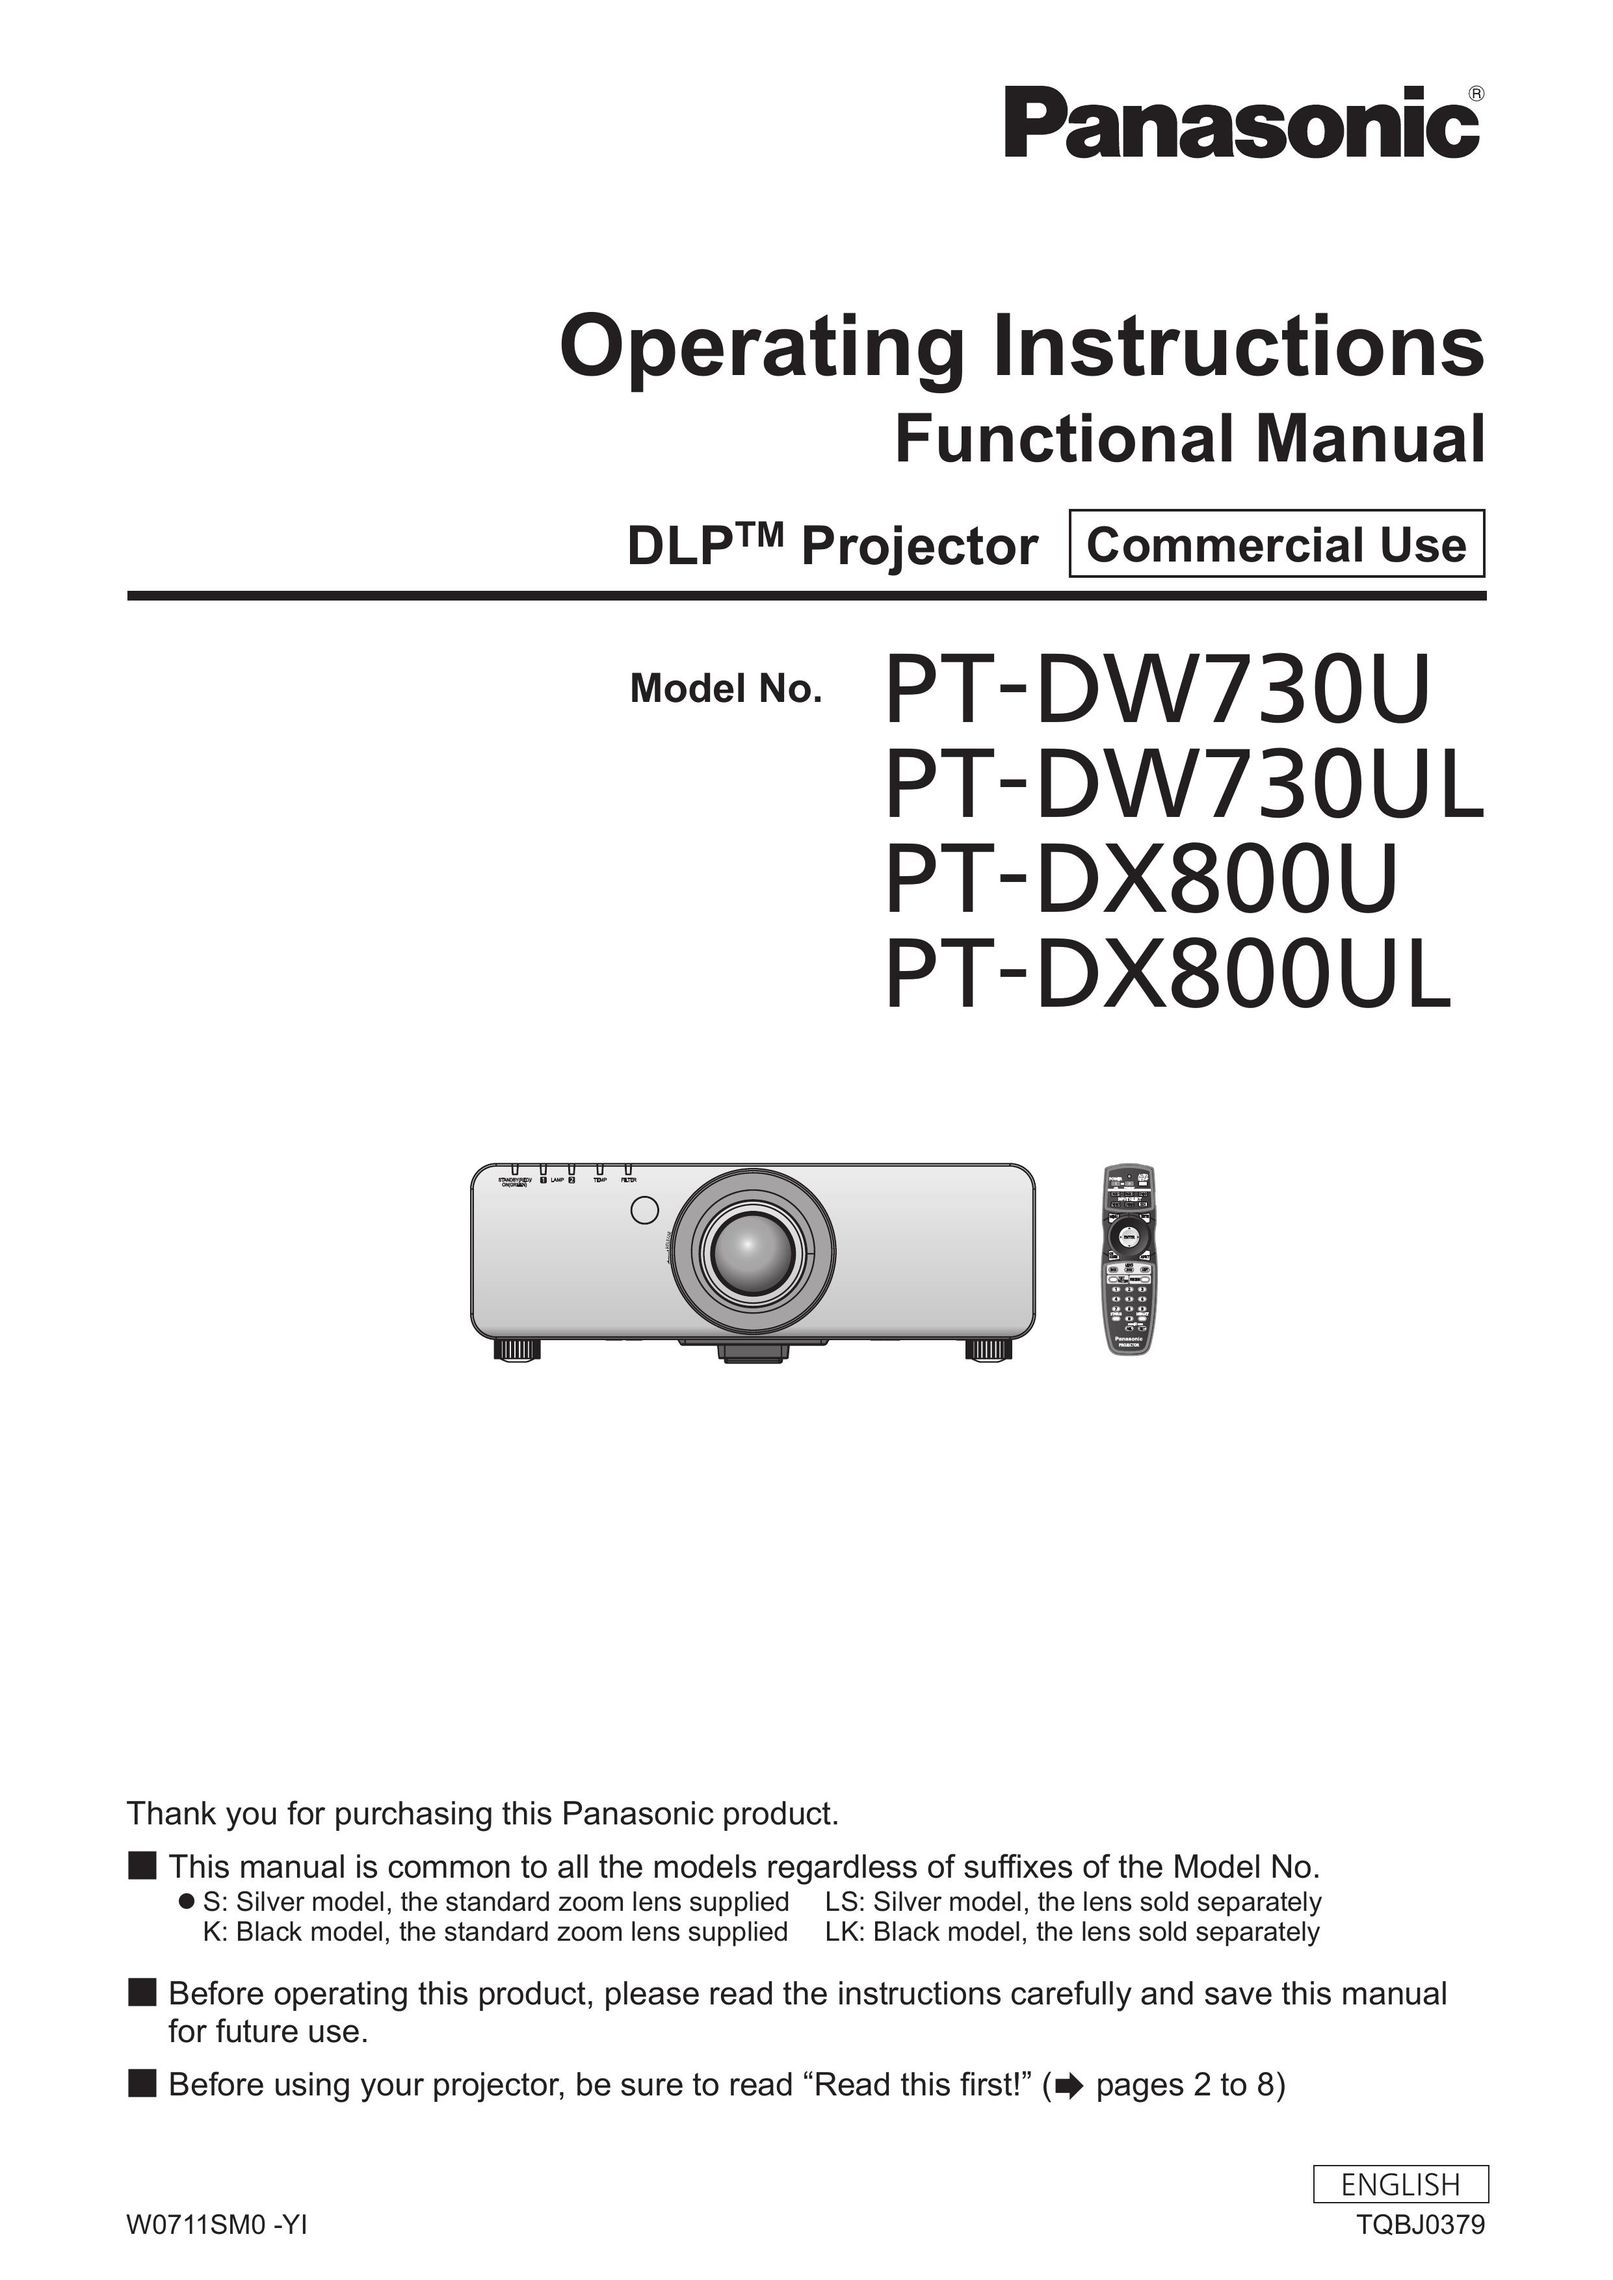 Panasonic PT-DX800U Home Theater System User Manual